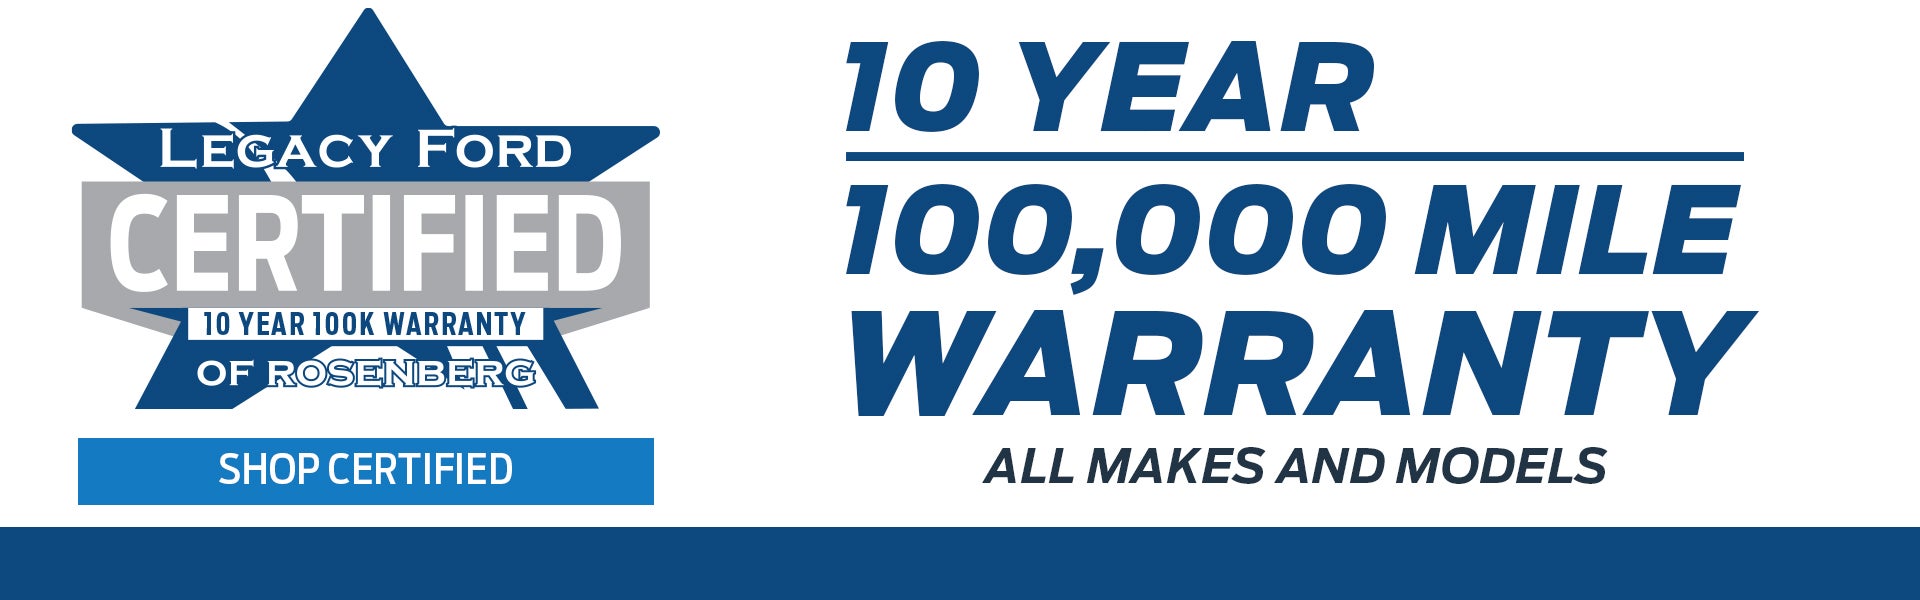 10 Year 100,000 Warranty